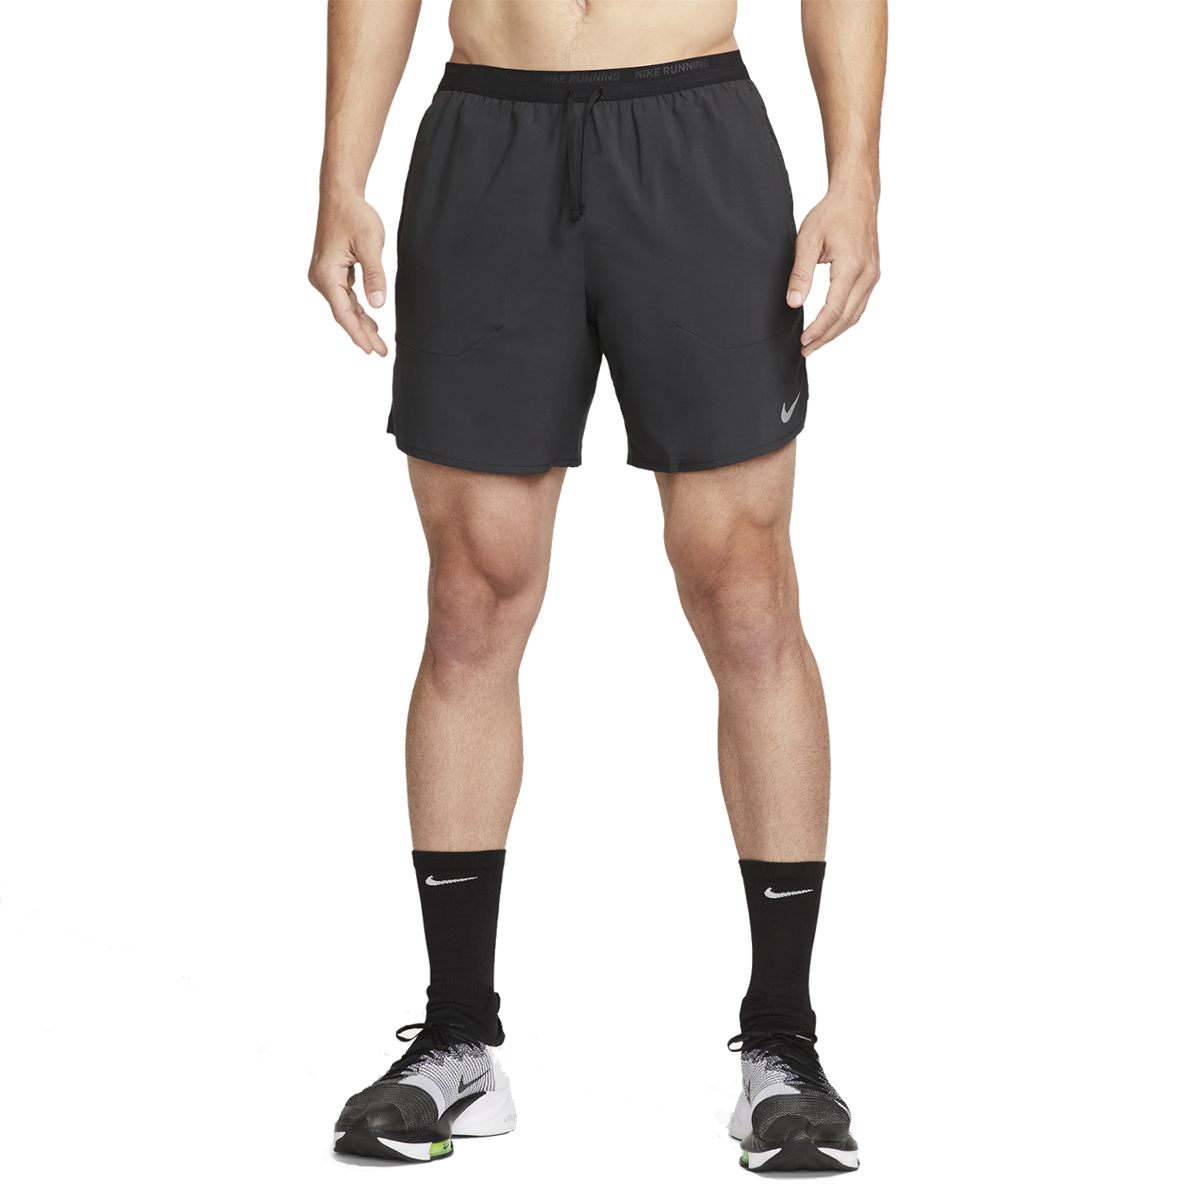 Nike Dri Fit Stride 7" Short, , large image number null